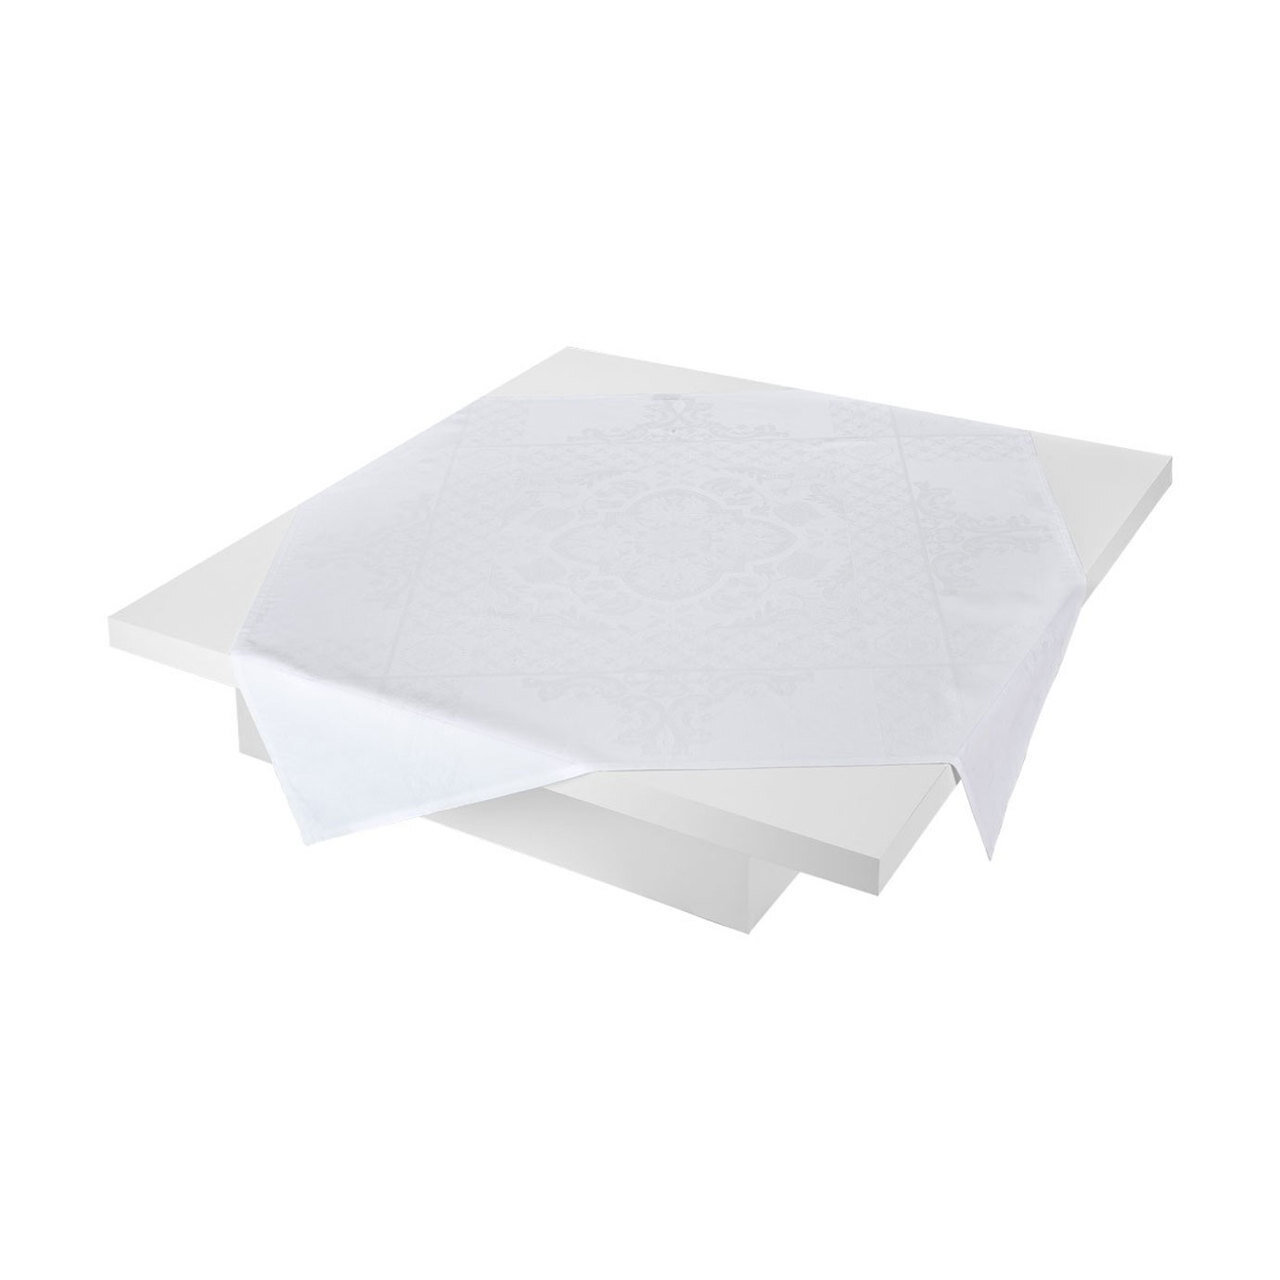 Le Jacquard Francais Azulejos White Tablecloth 47 X 47 Inch 22969